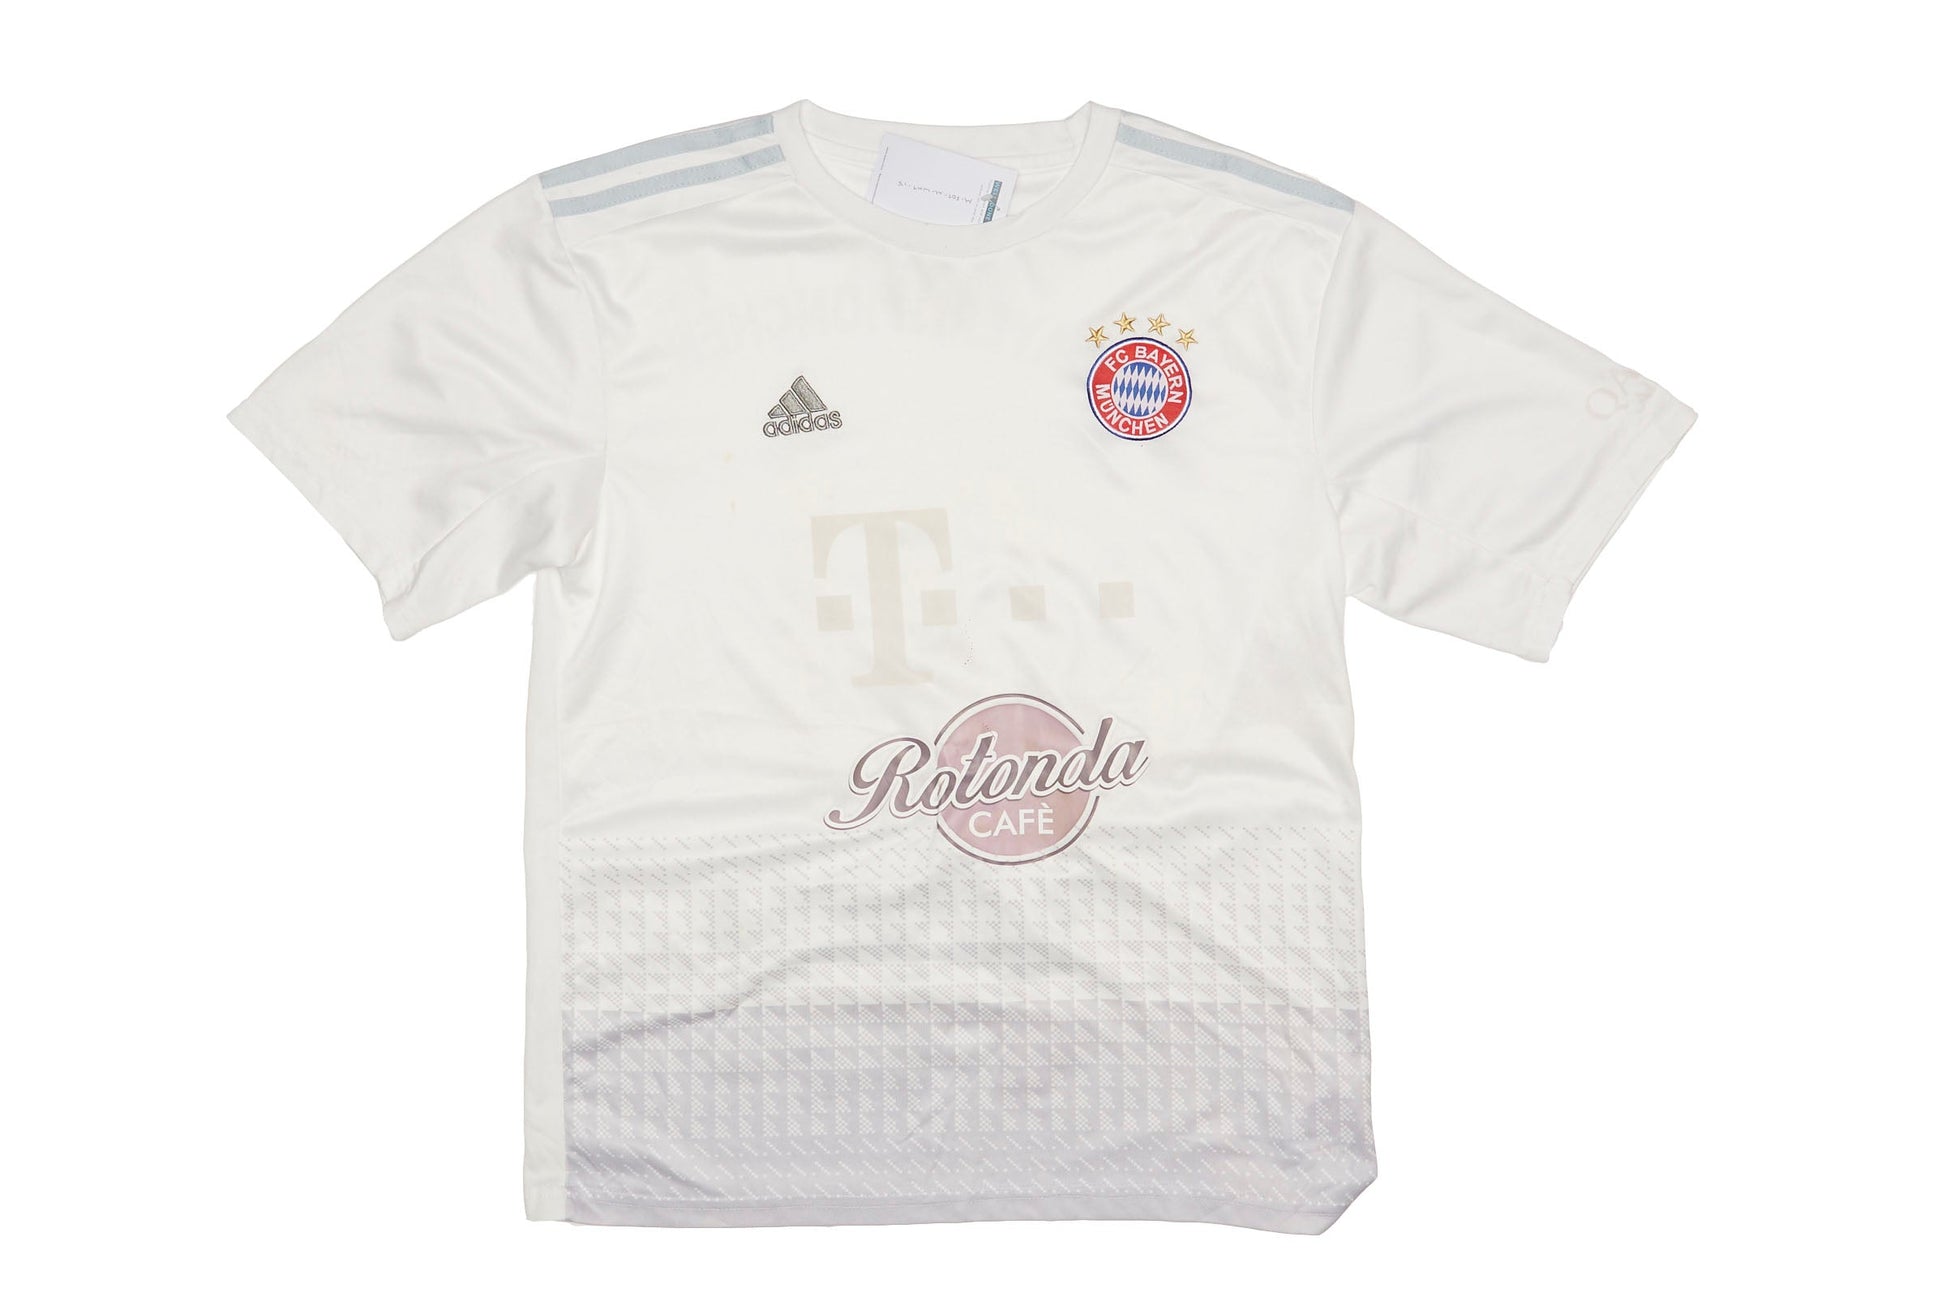 Mens Adidas Bayern Munich Football Shirt - M